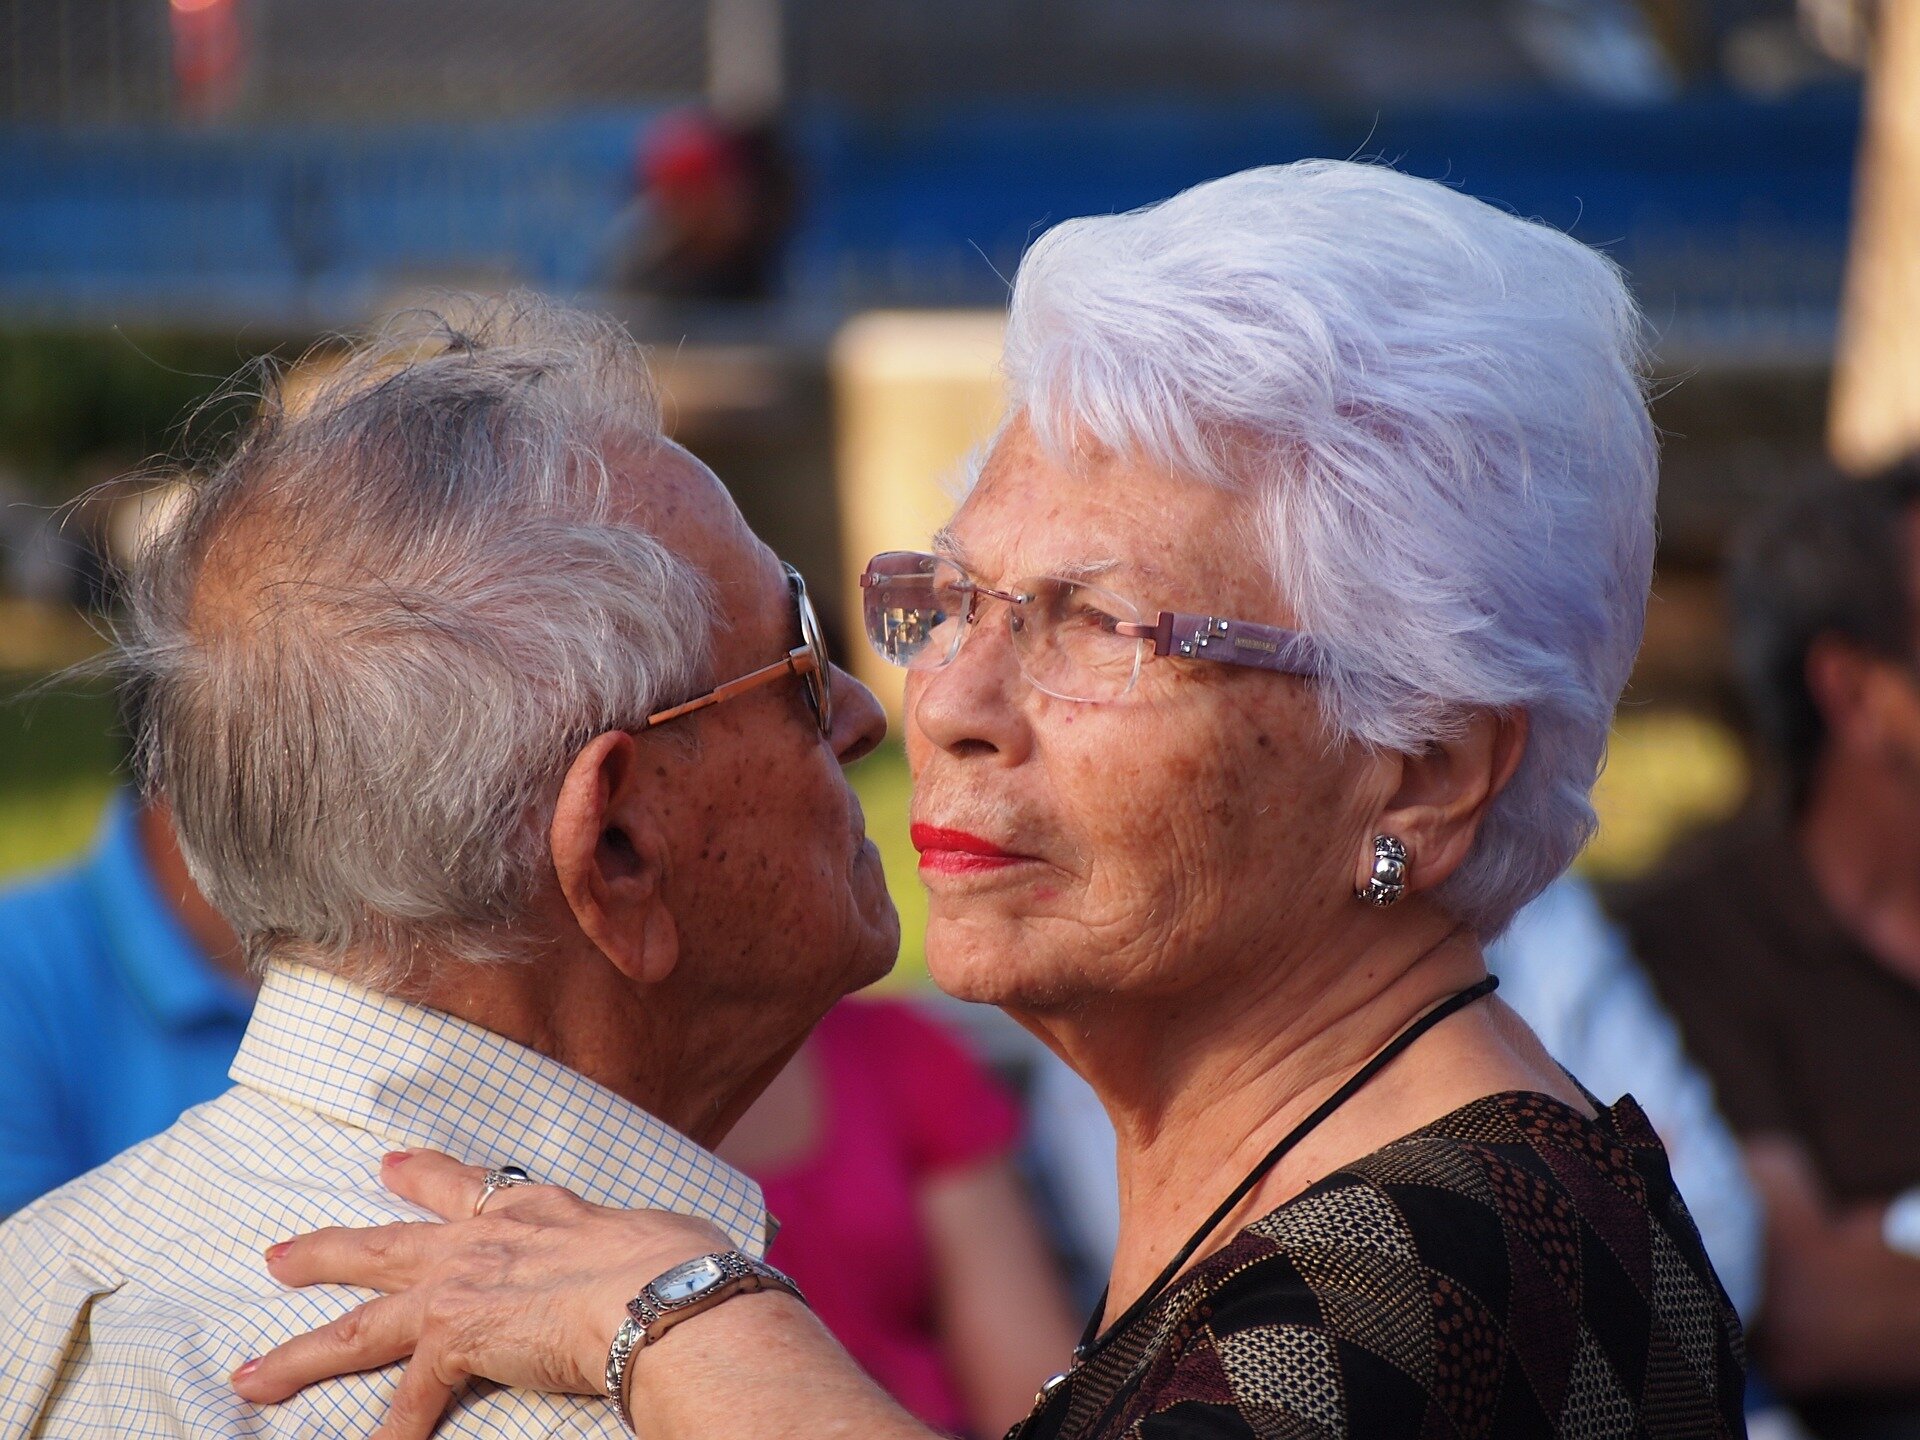 Frequent socializing linked to longer lifespan of older folks